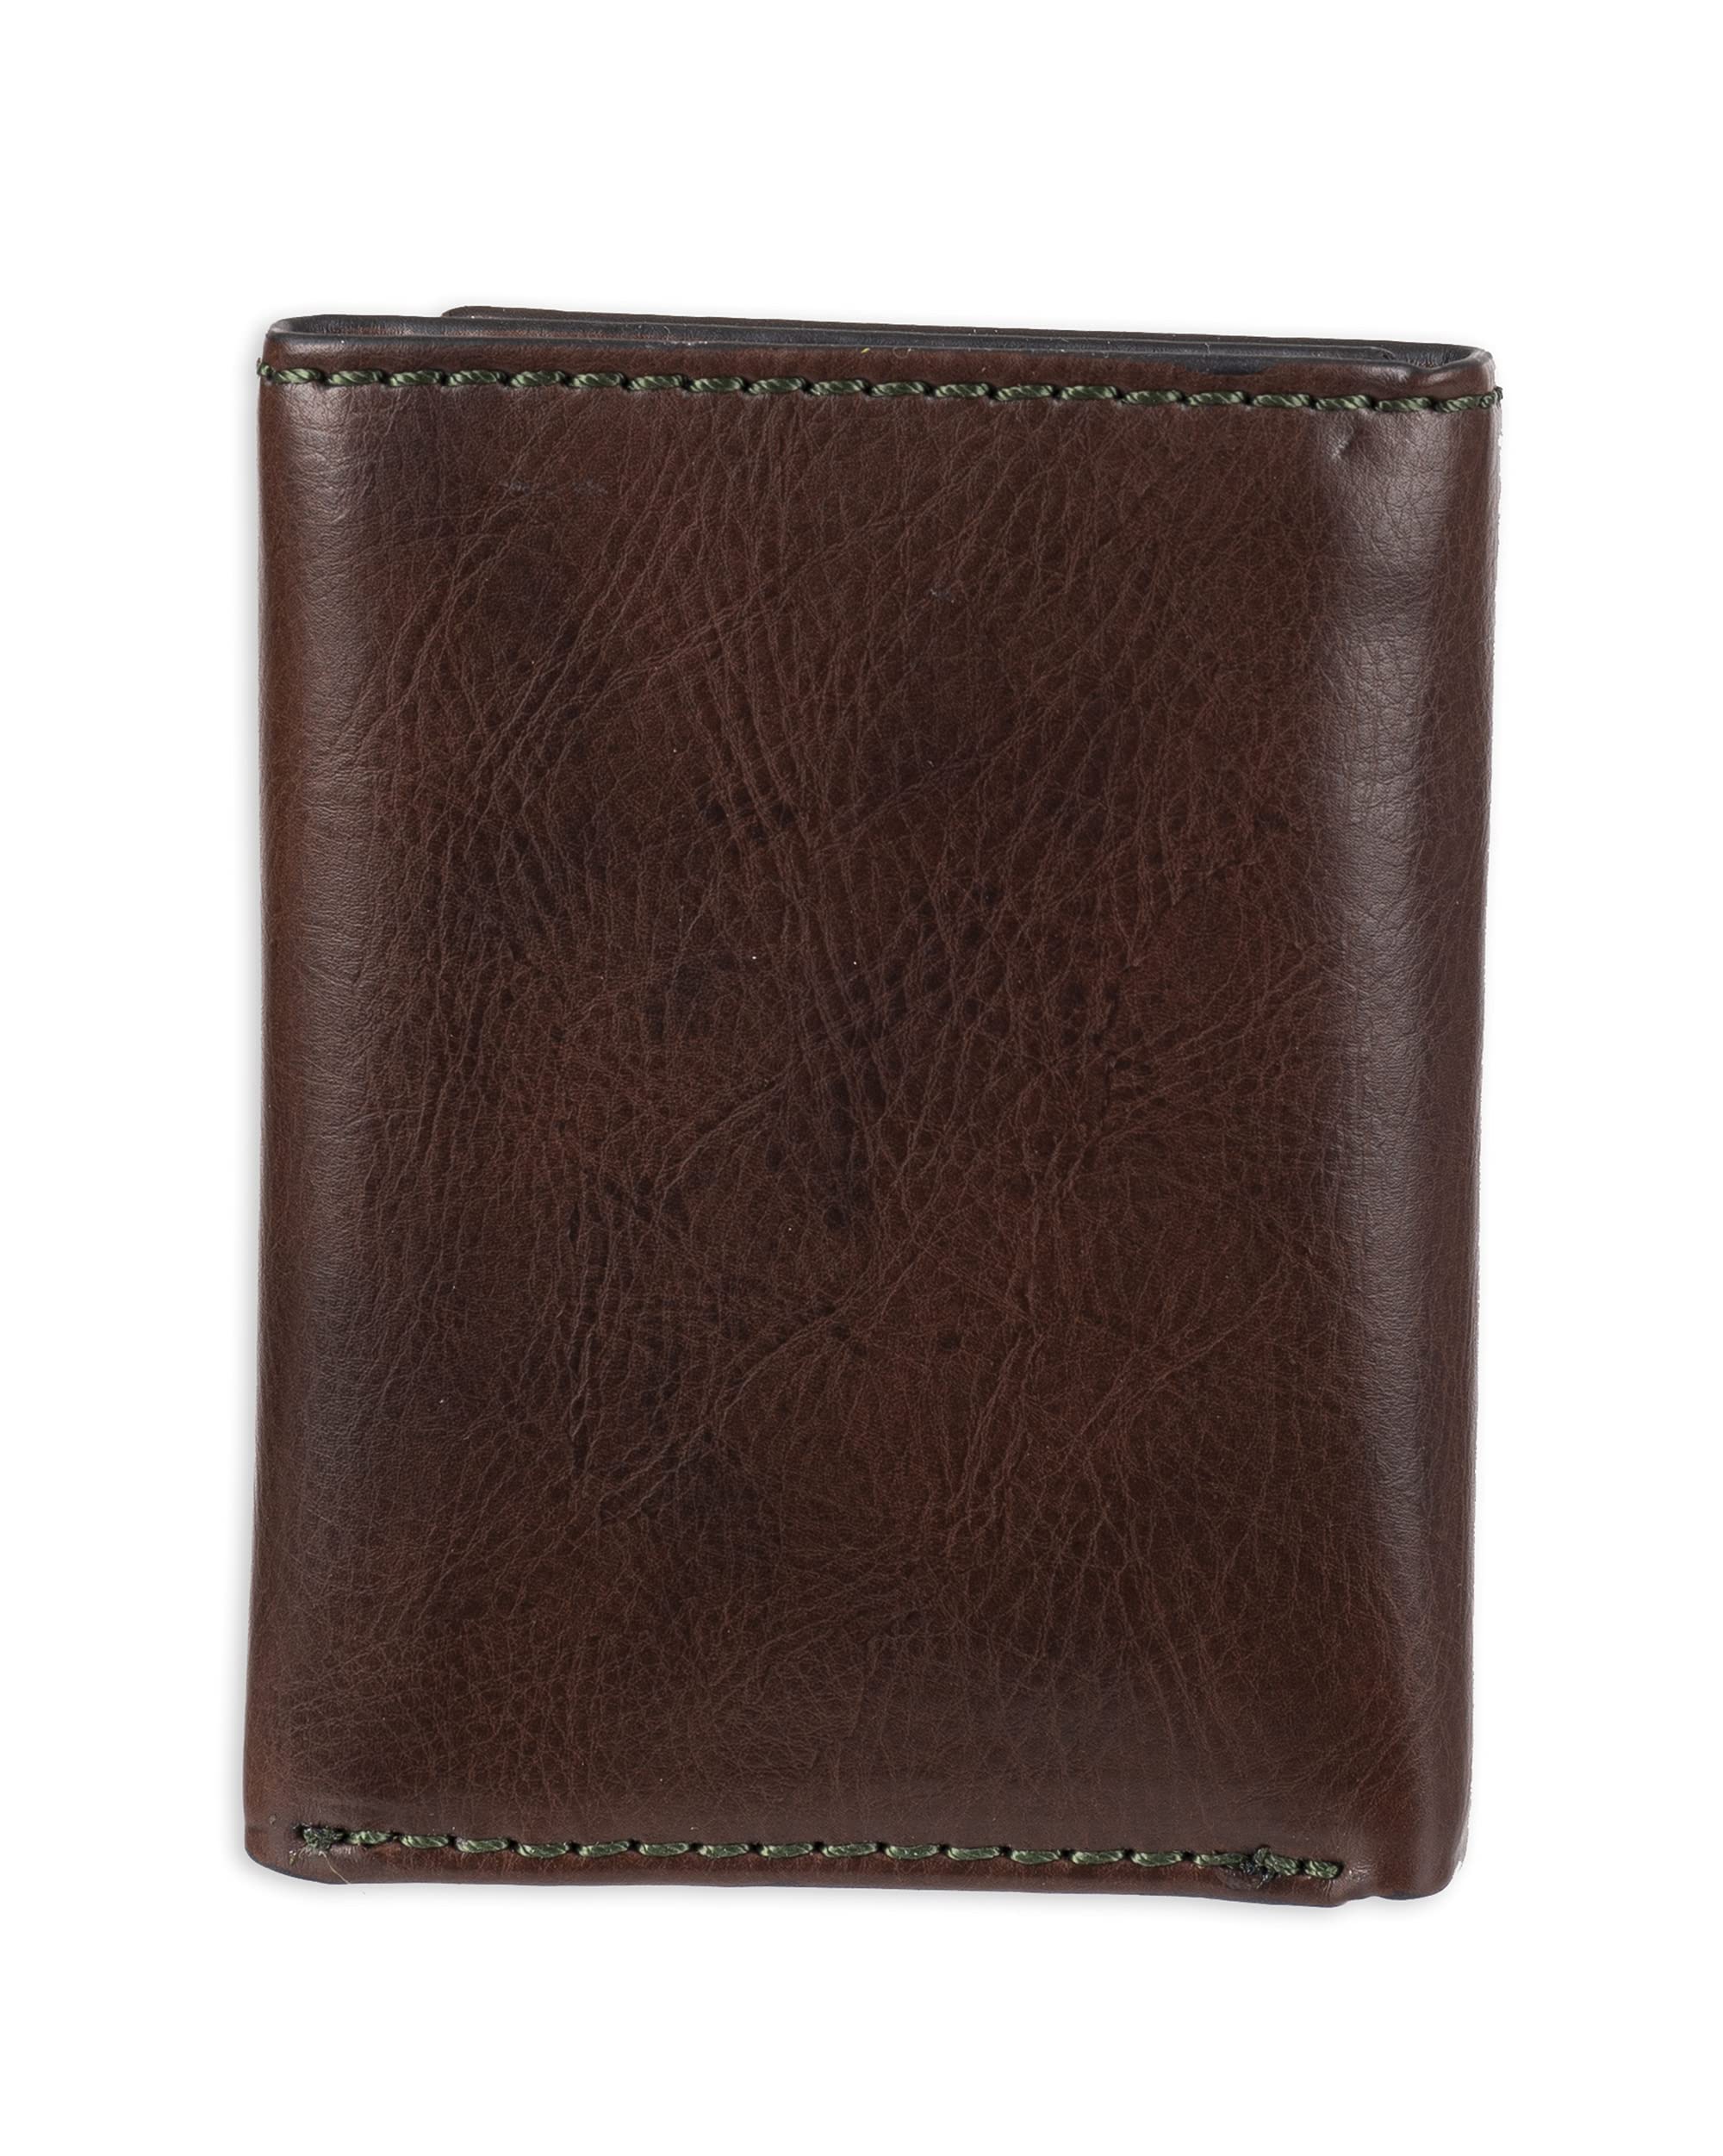 Levi's Men's Sleek and Slim Trifold Minimalist Wallet